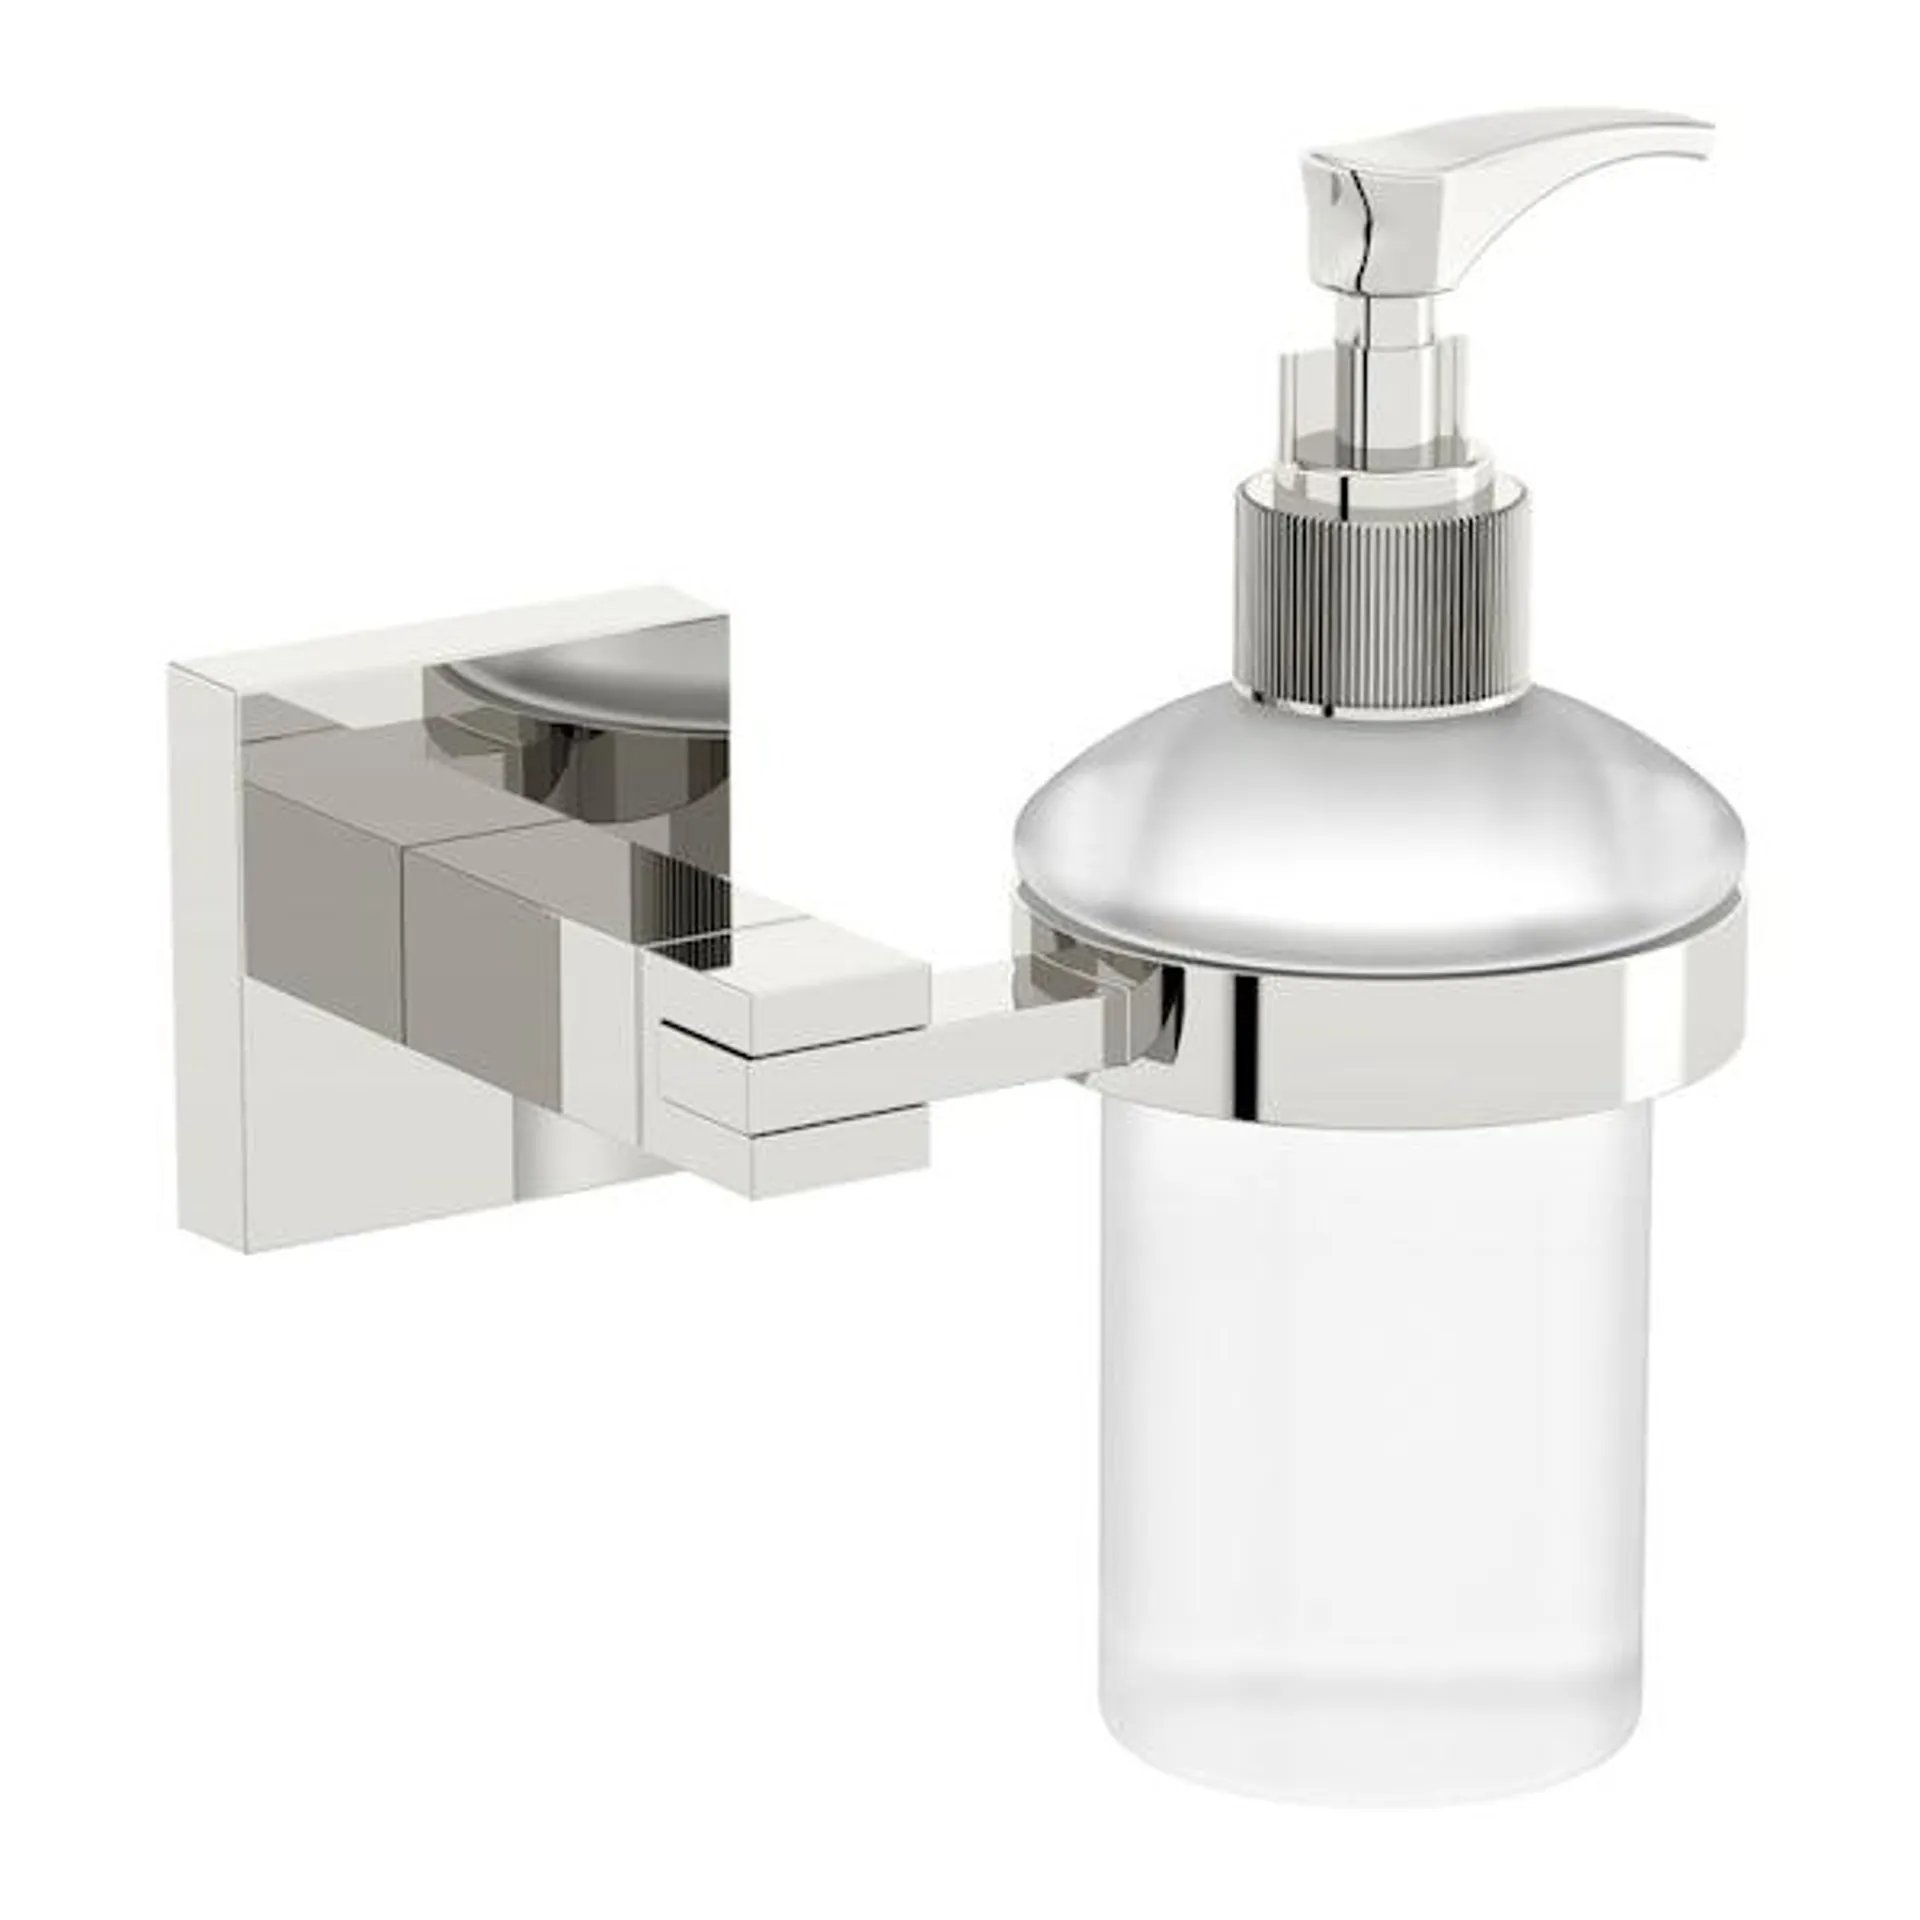 Accents Flex soap dispenser